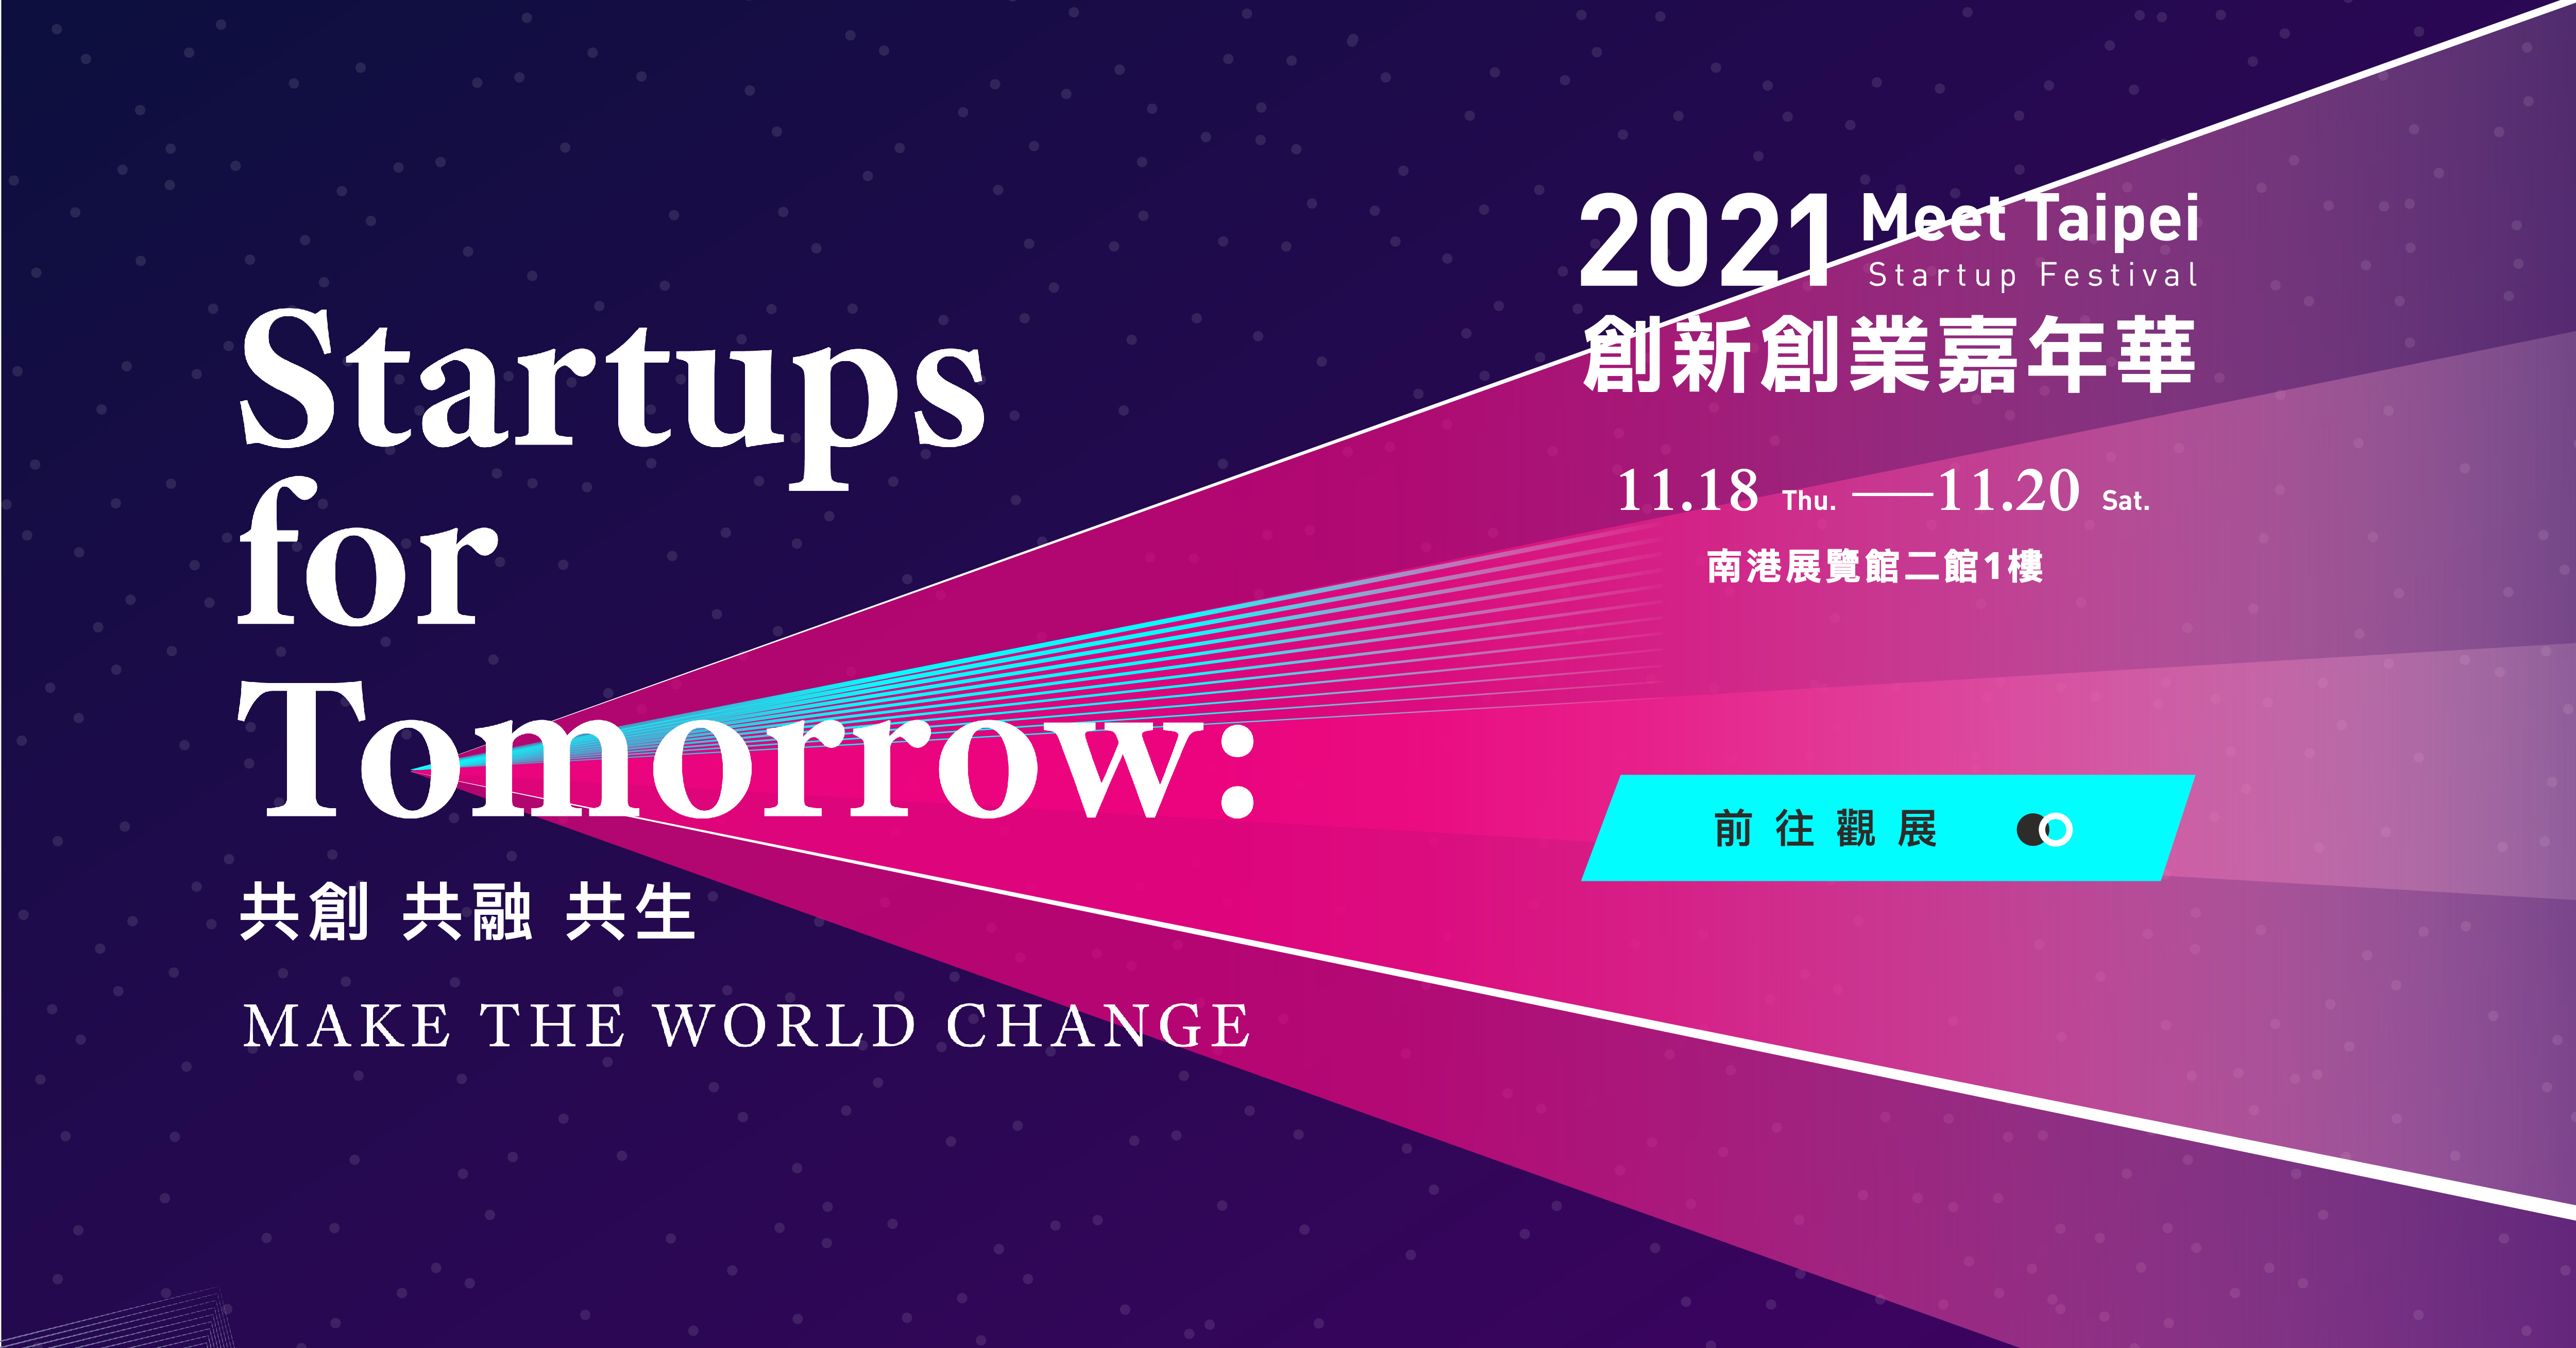 Meet Taipei X Meet Greater South 2021